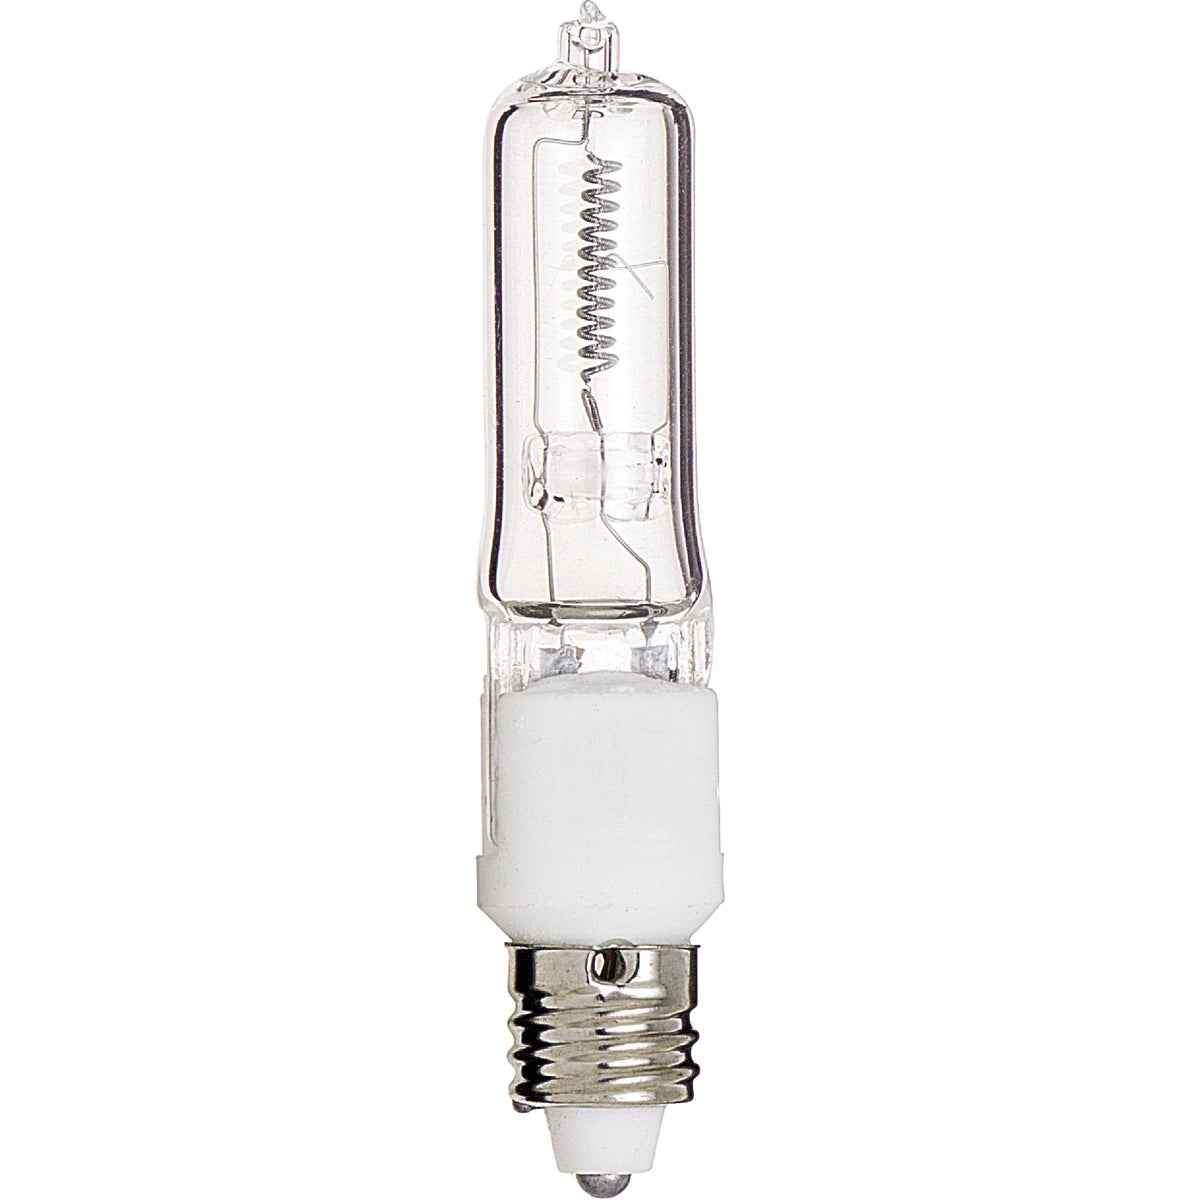 Item 502369, T4 halogen, special purpose light bulb with mini candelabra base.